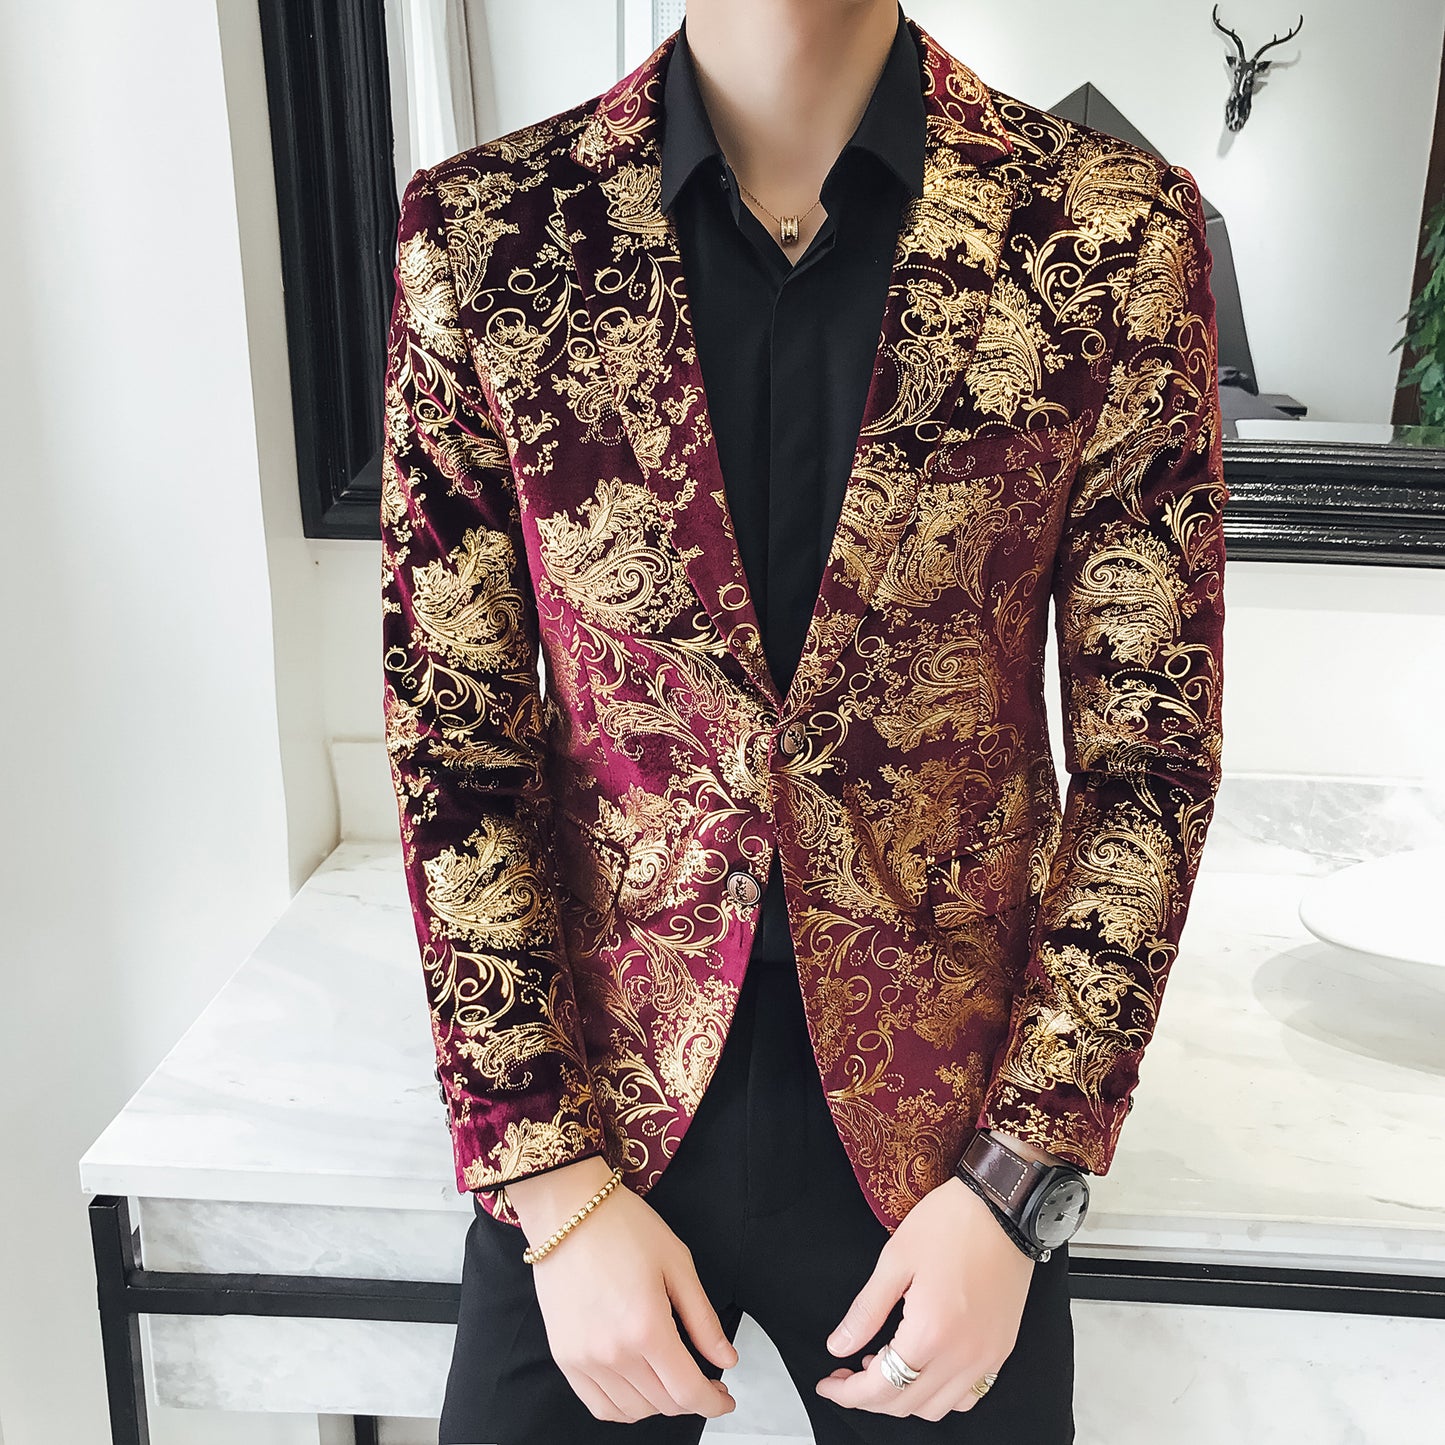 Suit Men's Silky Blazer Youth Jacket